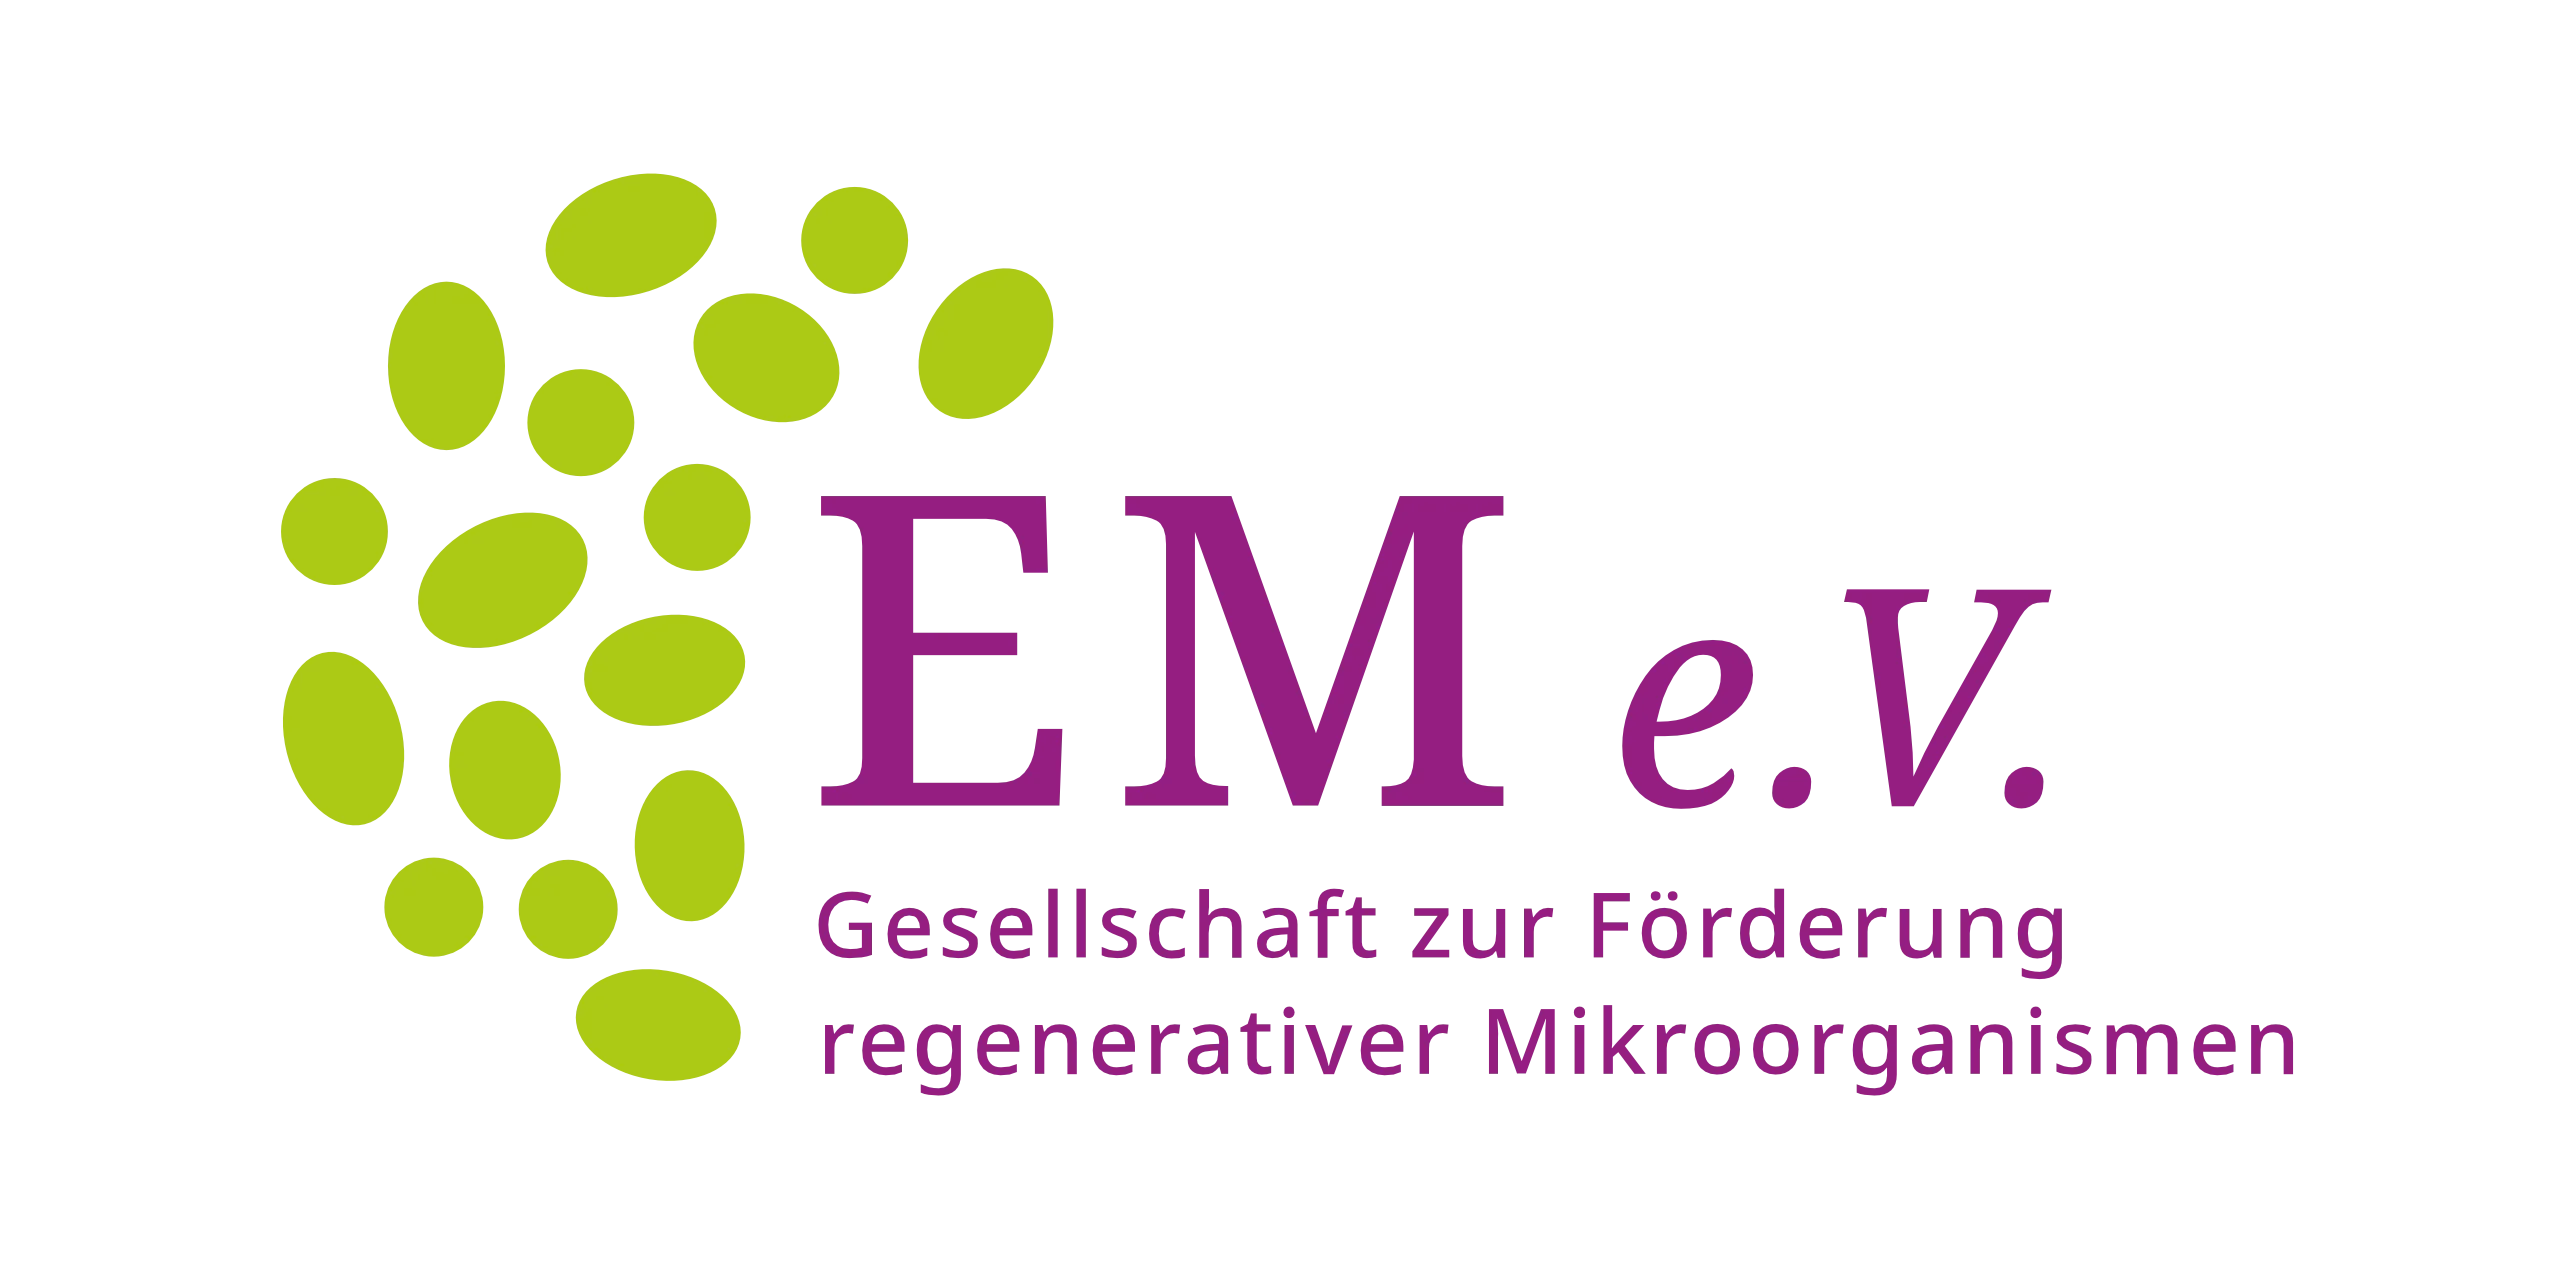 Effektive Mikroorganism – EM e.V.